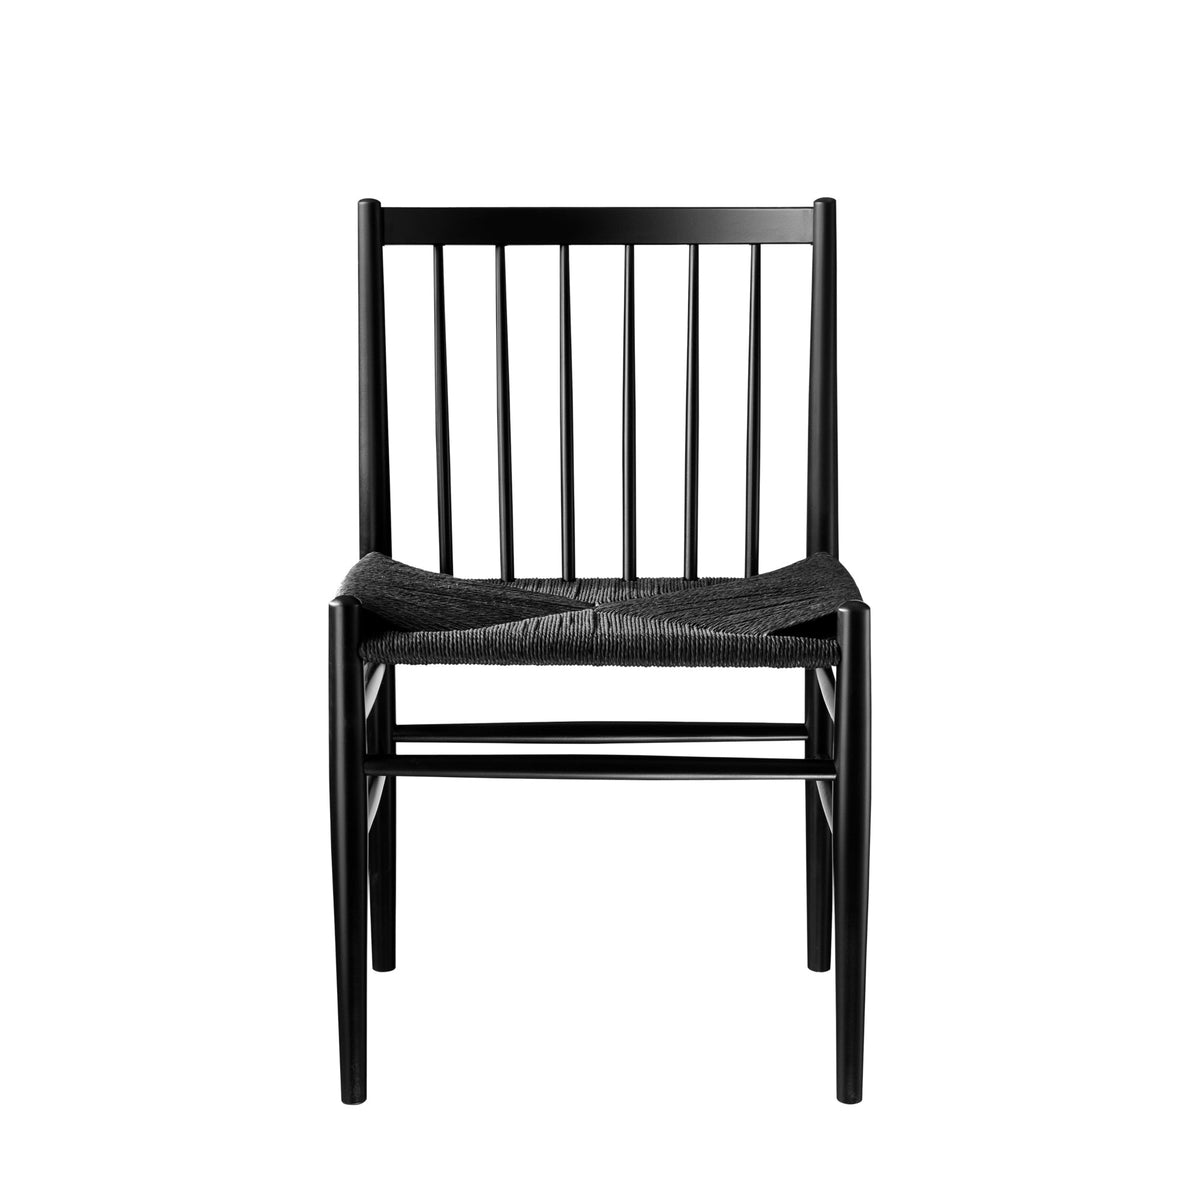 FDB Møbler J80 tuoli musta/musta - Laatukaluste